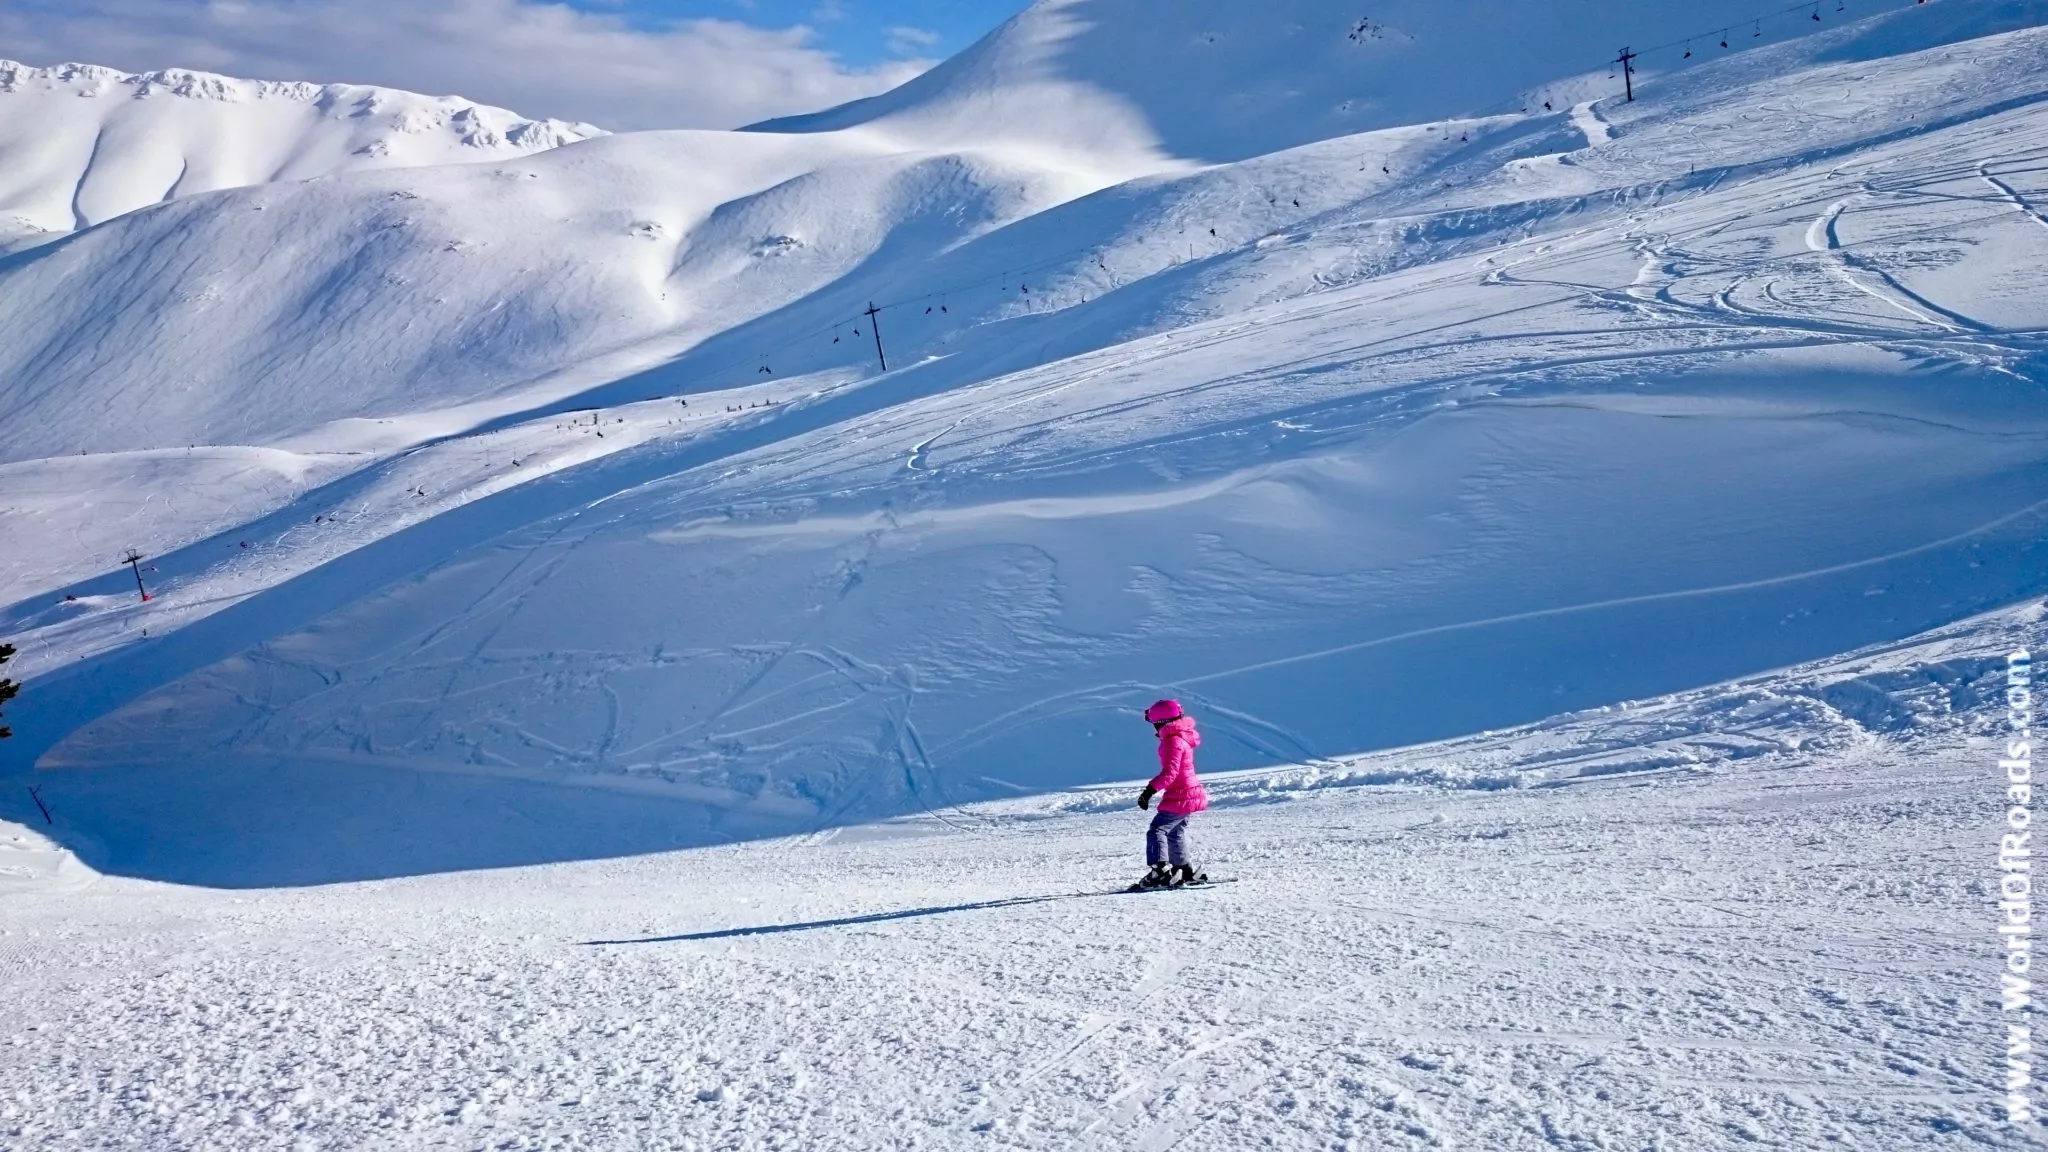 Snowy Ski Resort in Russia, Europe | Snowboarding,Skiing - Rated 3.8